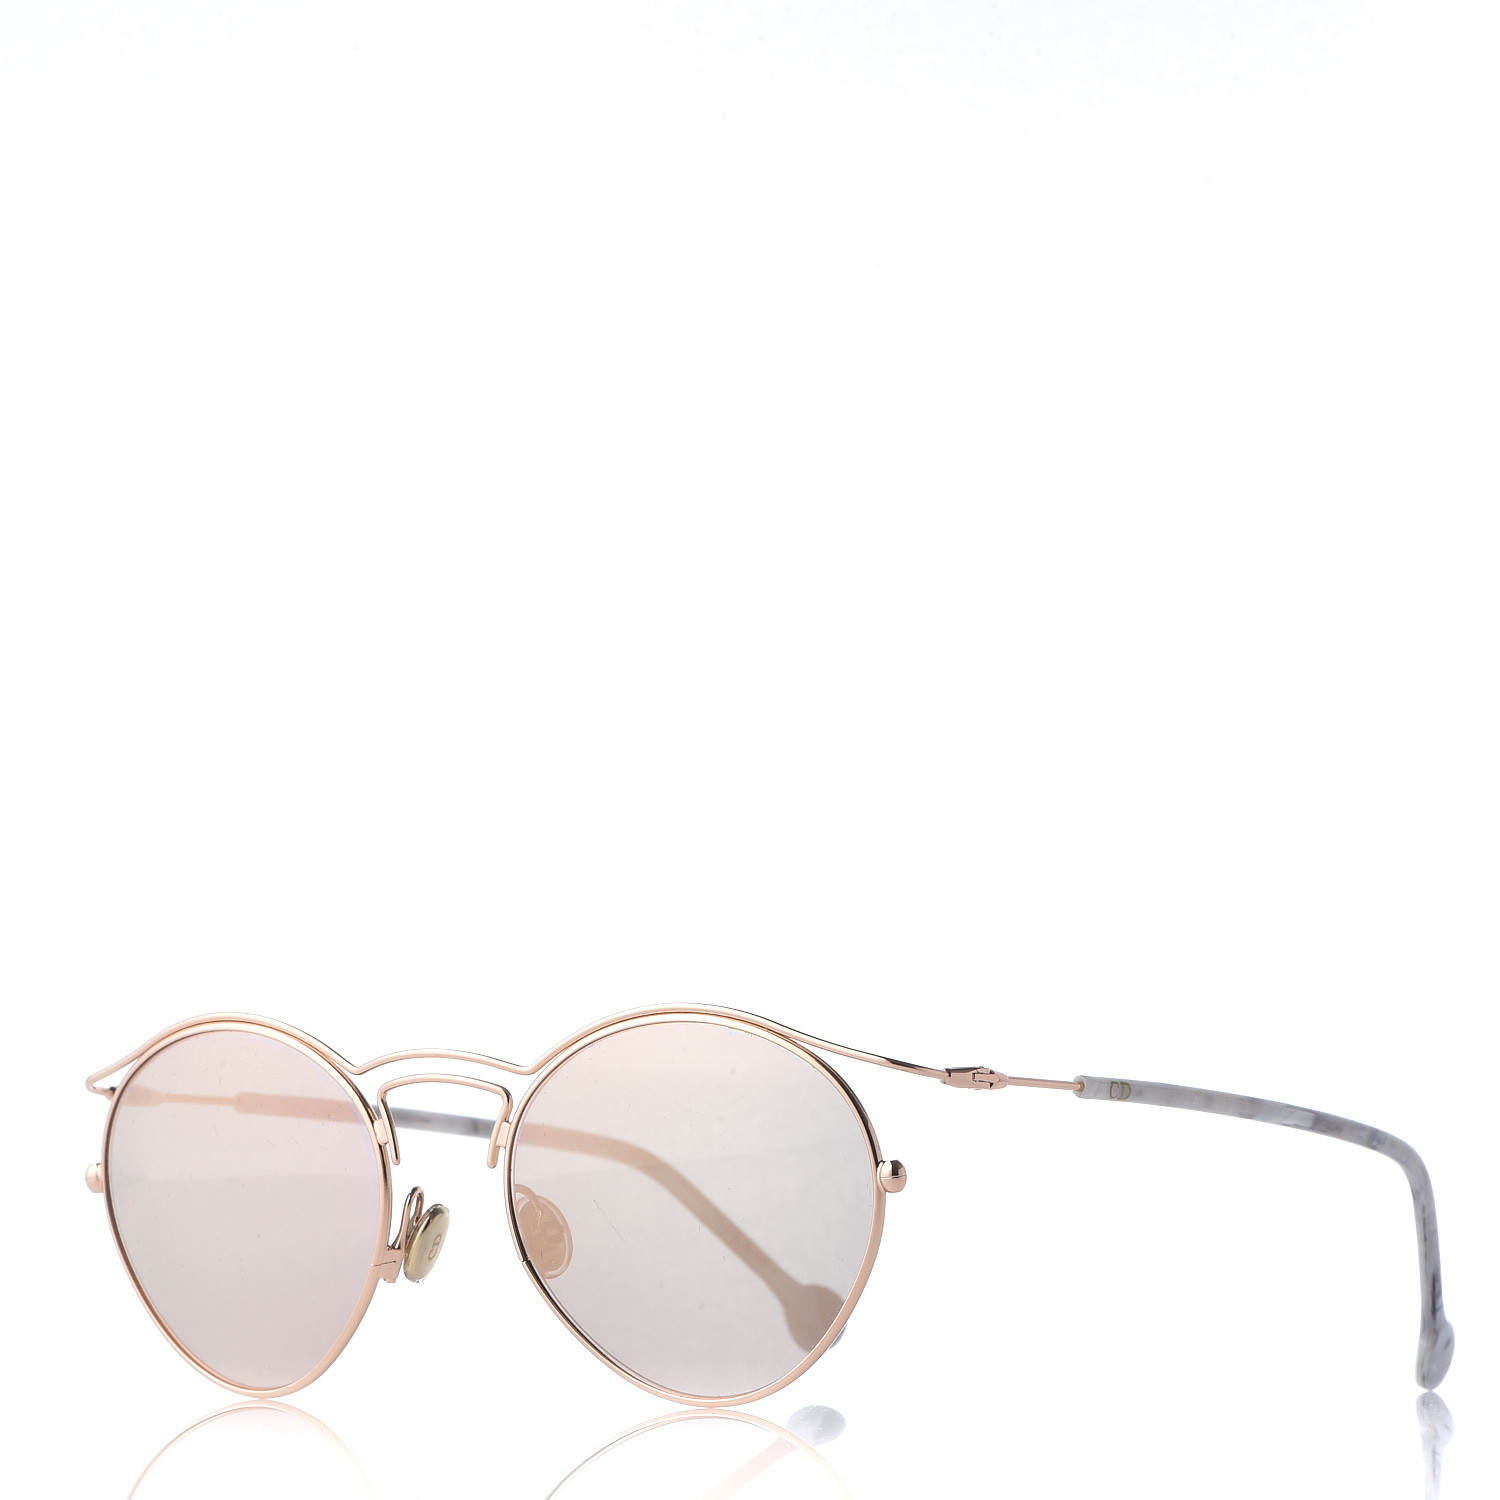 dior origins 1 sunglasses